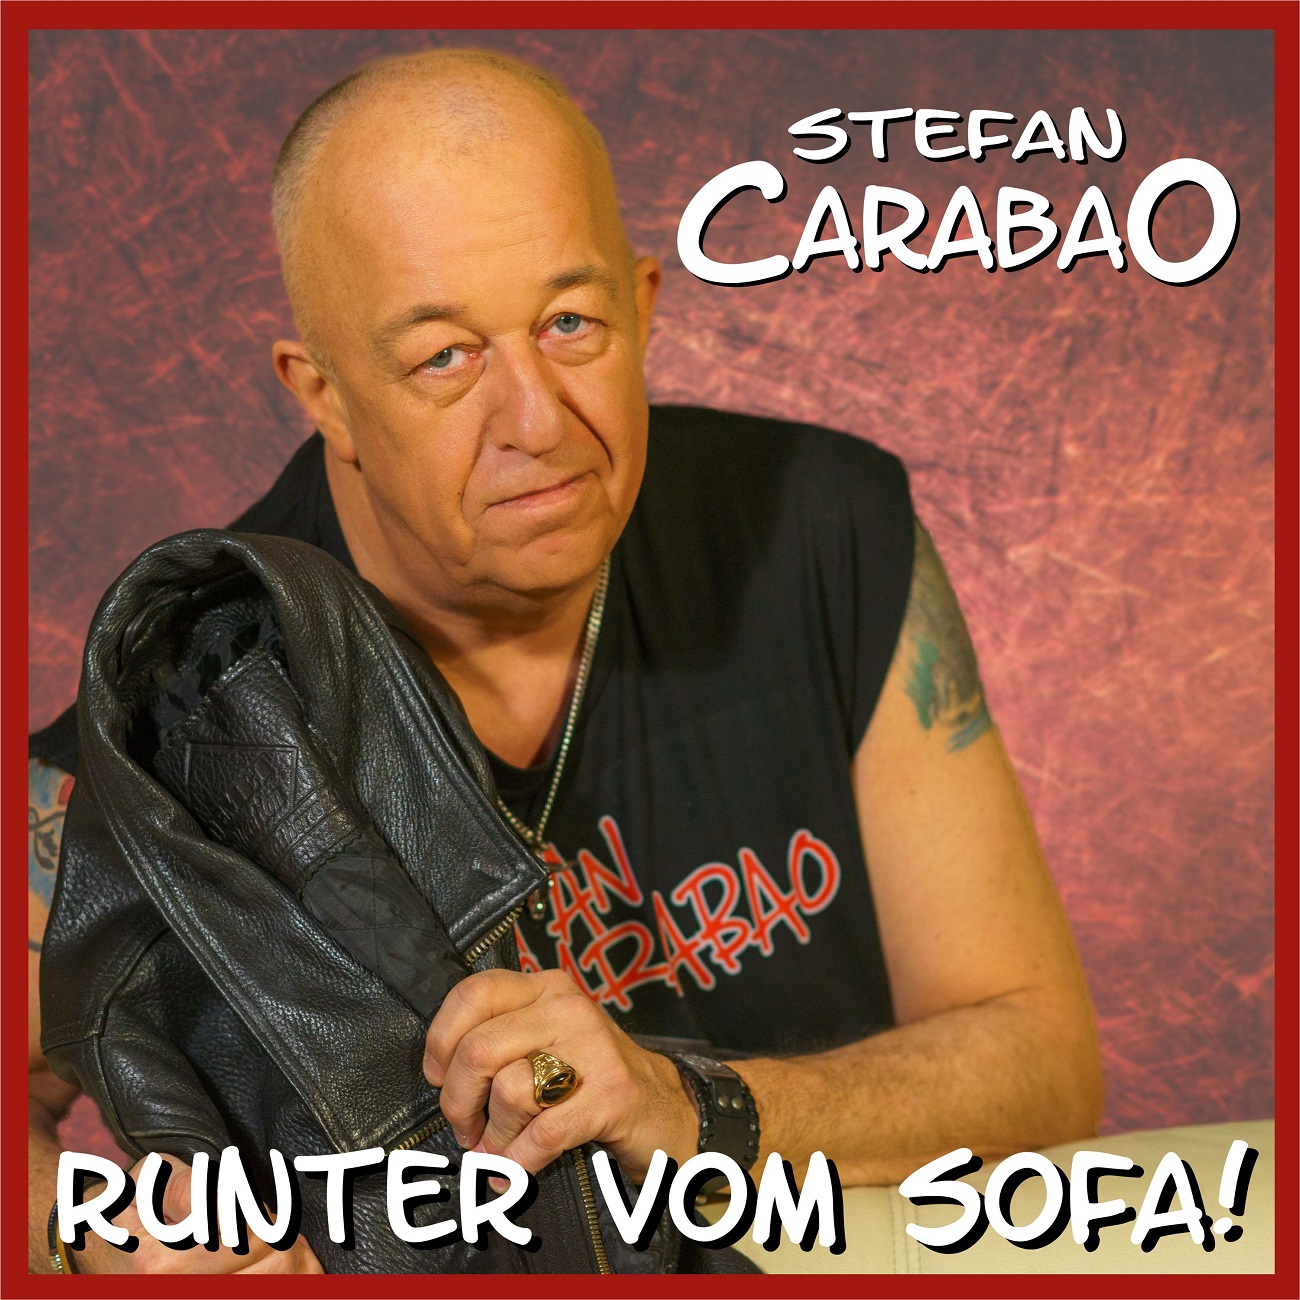 Stefan Carabao - runter vom Sofa - Cover3000px.jpg